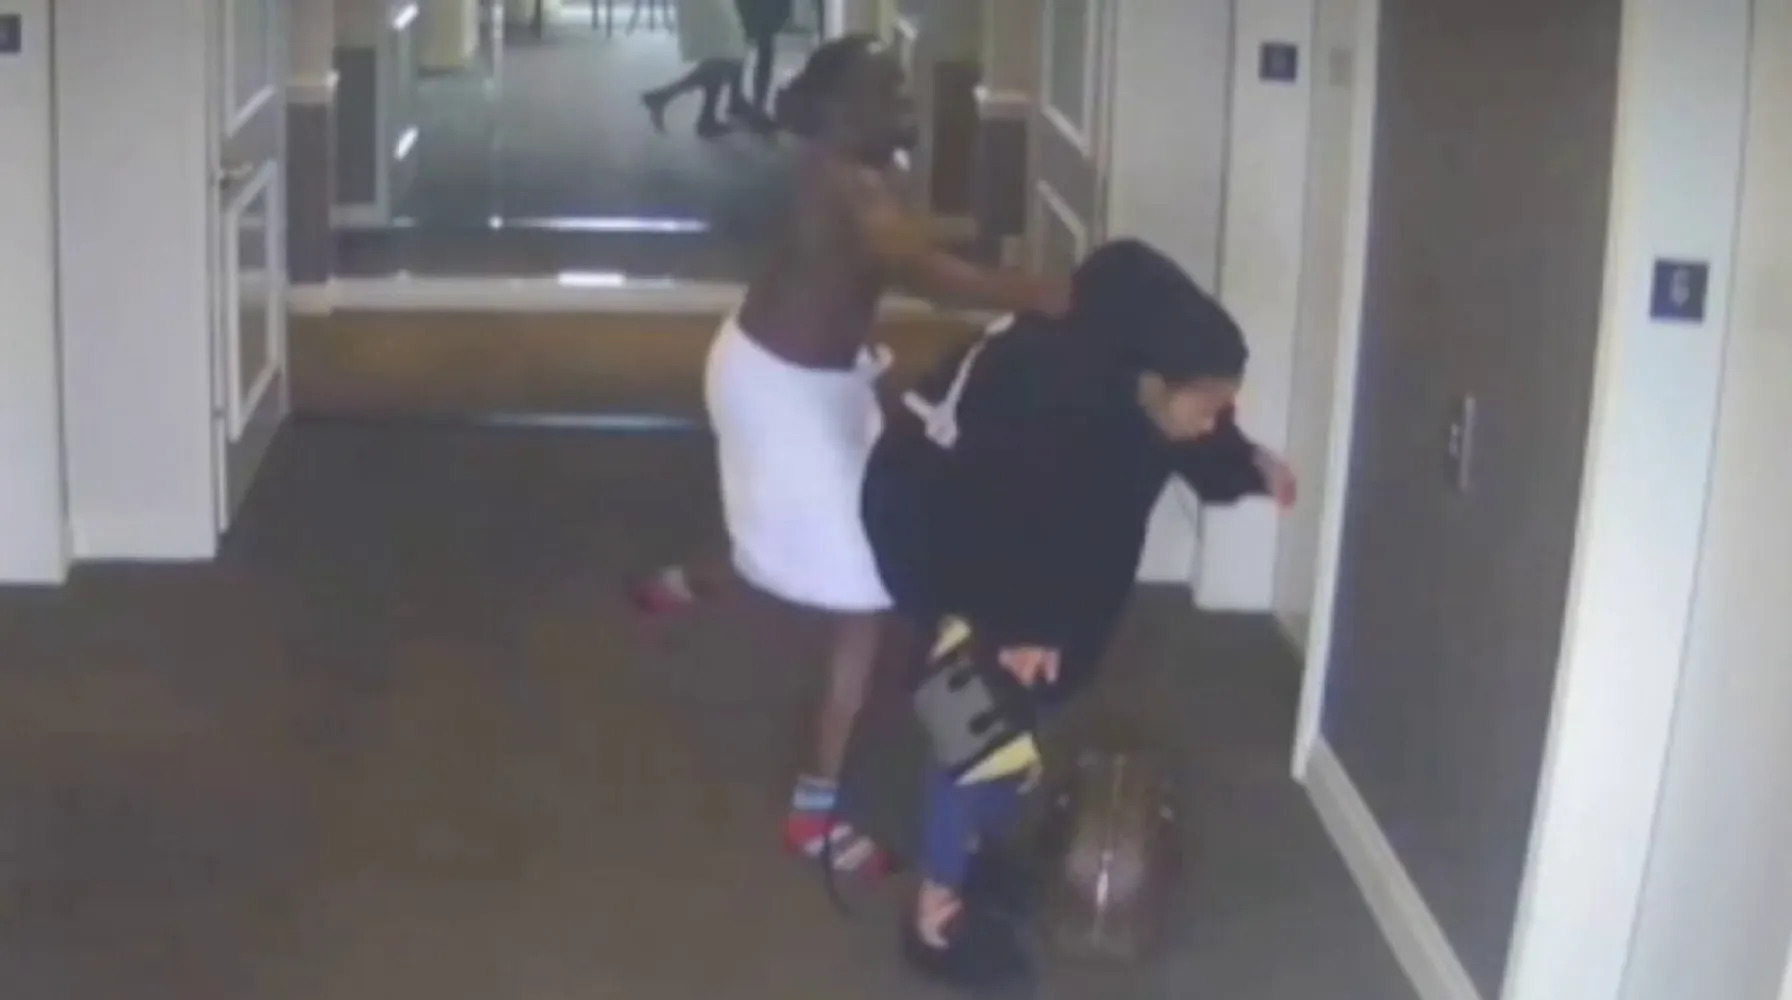 Newly released hotel video by CNN shows Diddy allegedly assaulting ex-girlfriend Cassie Ventura